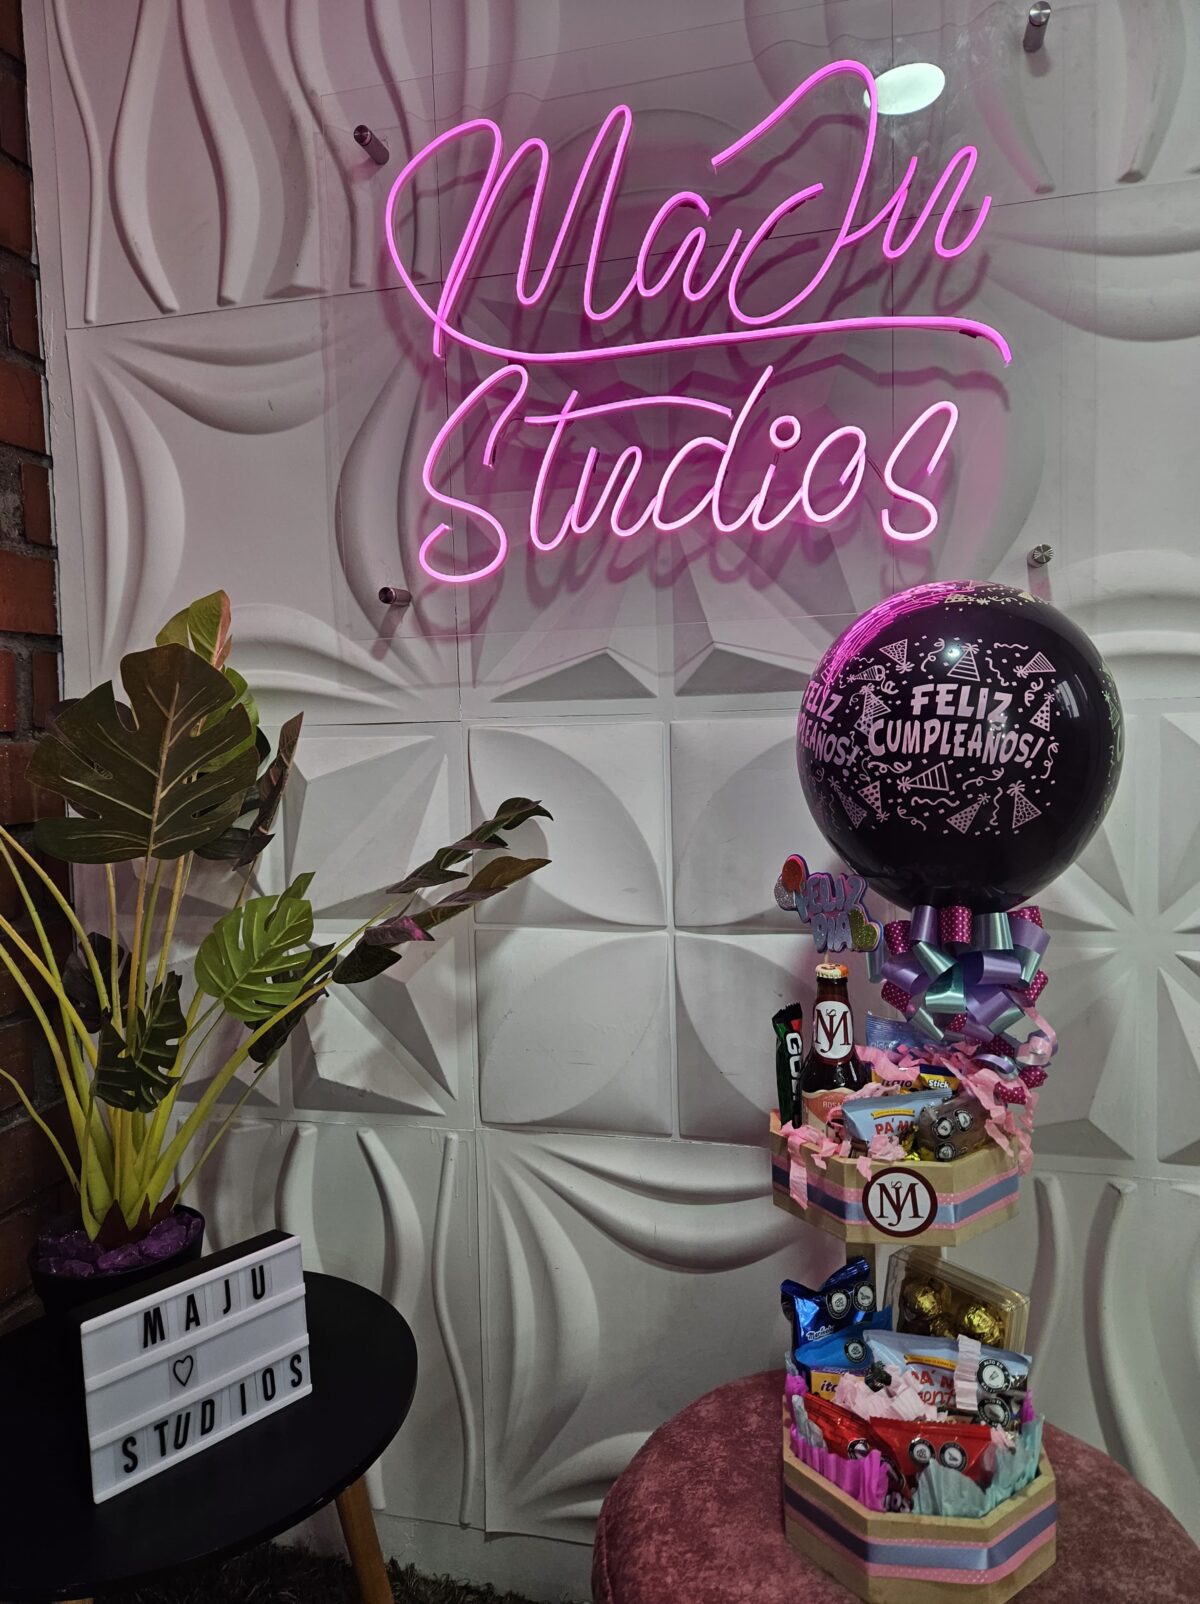 Cumpleaños Mayo 2023 MaJu Studios Manizales